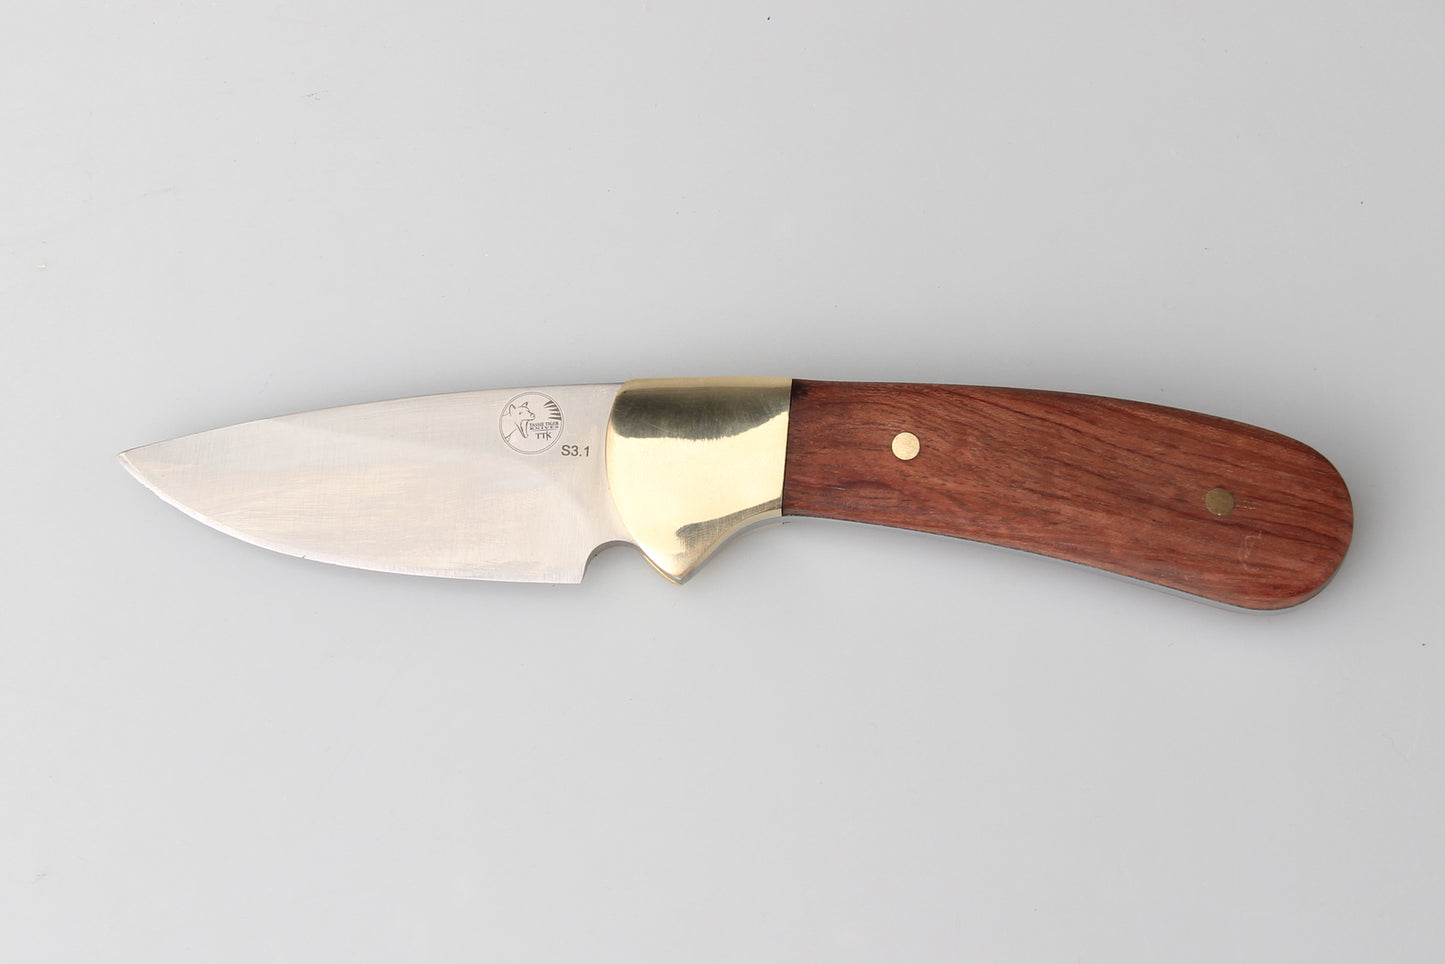 Tassie Tiger Knives Tassie Tiger 3 Inch Fixed Blade Skinner Hunting Knife - Nylon Sheath #s3.1N Sienna